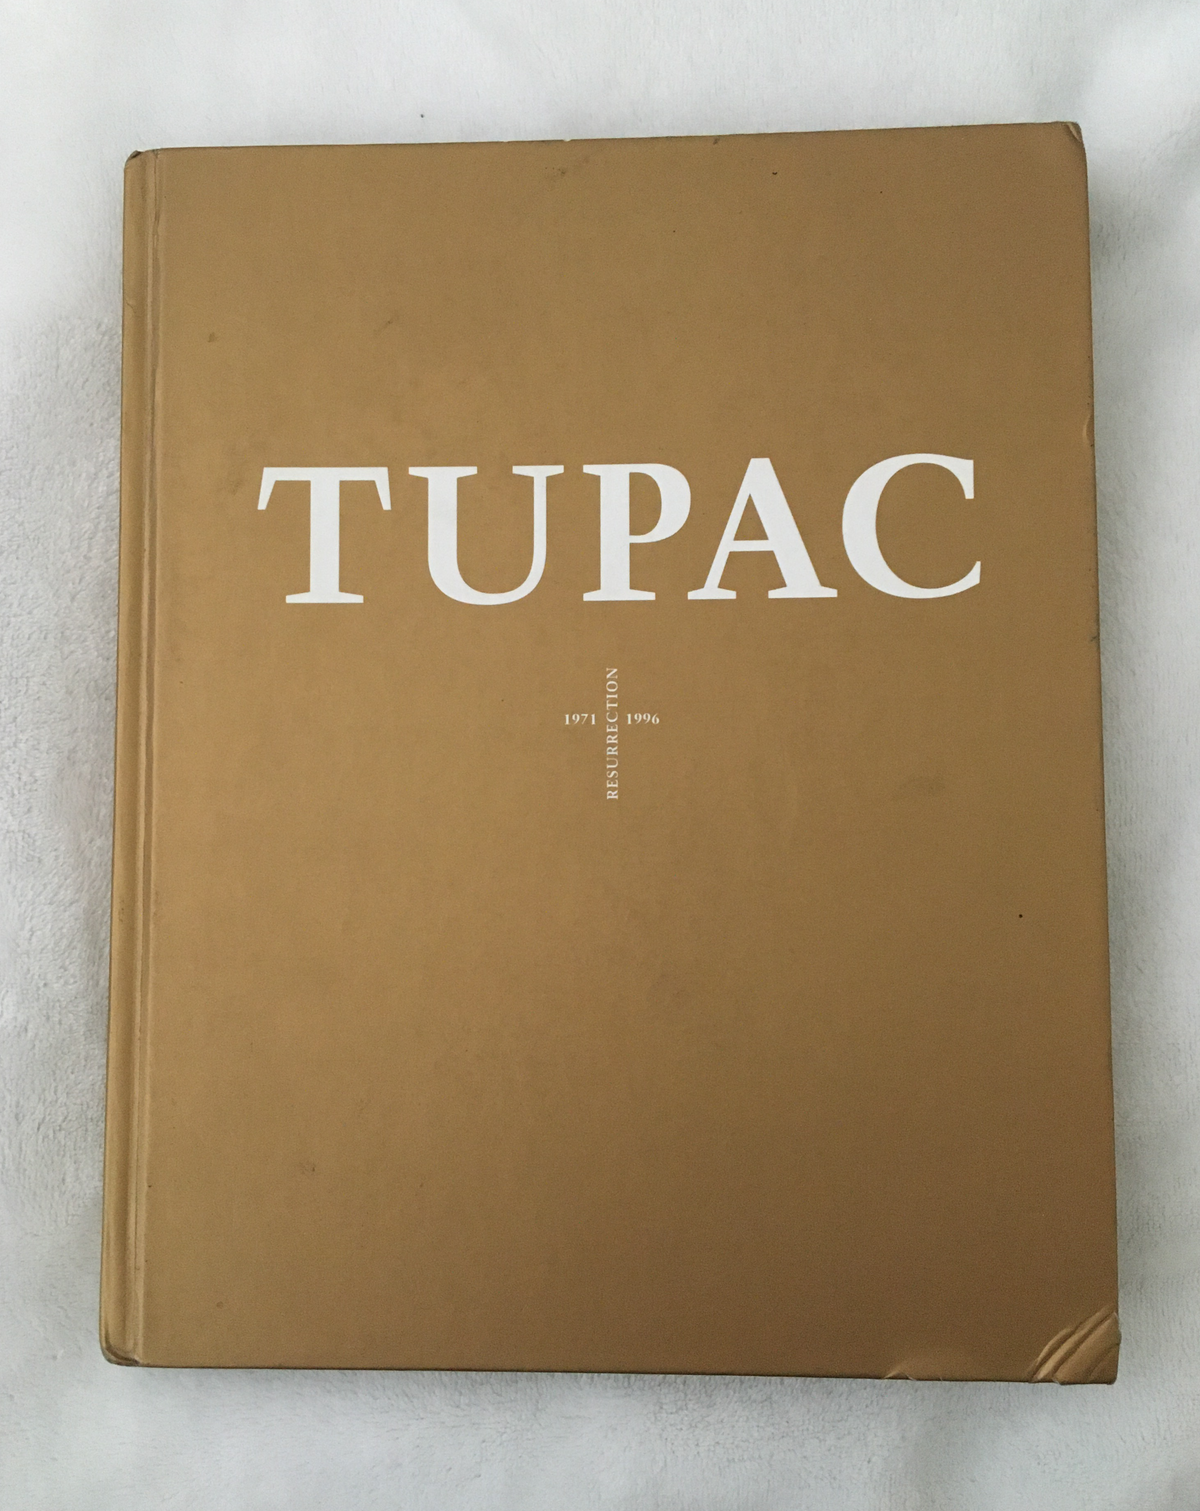 Tupac: Resurrection by Tupac Shakur, book, Ten Dollar Books, Ten Dollar Books